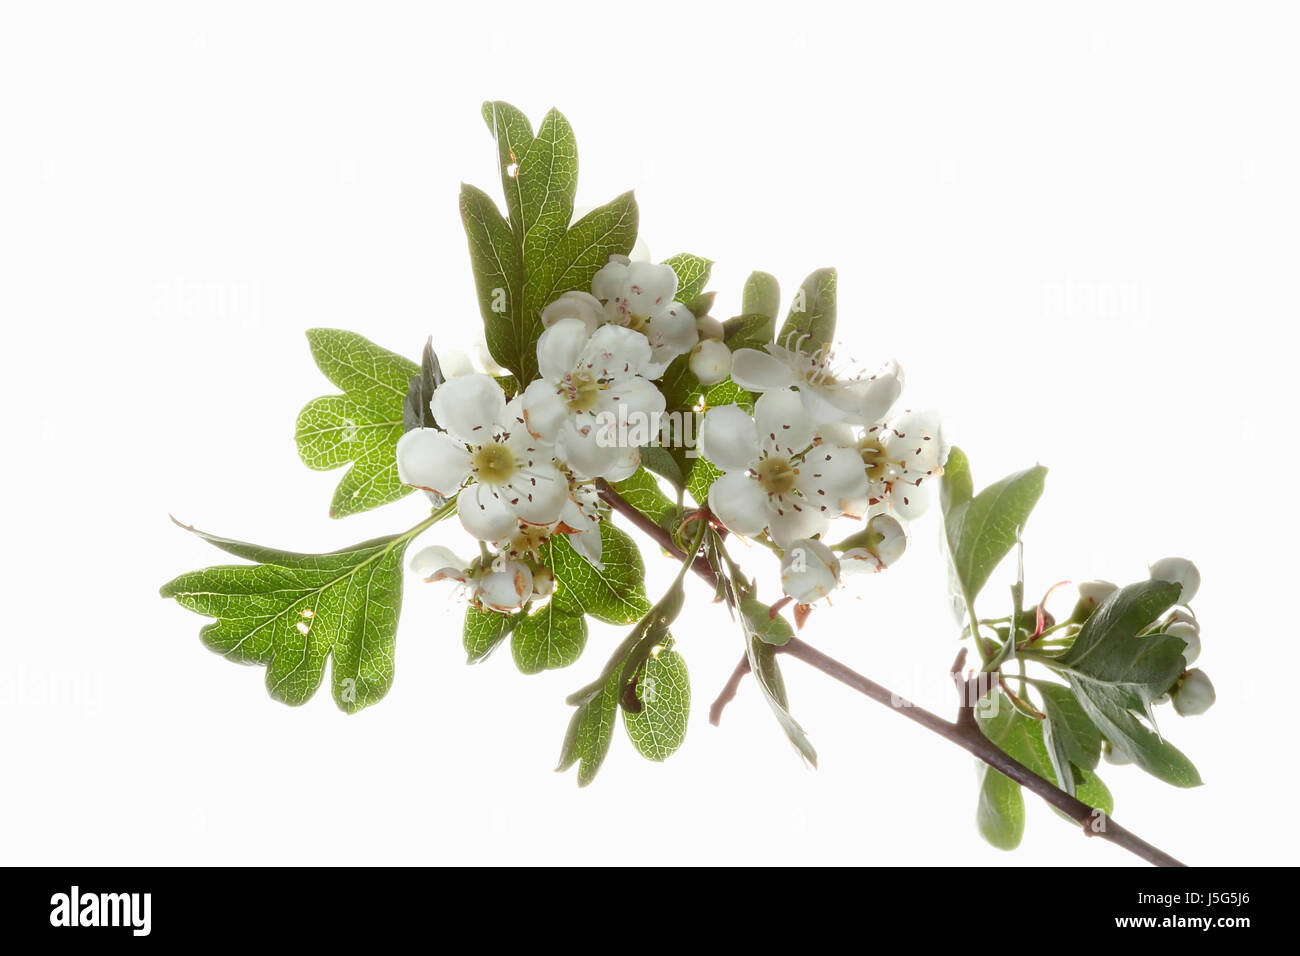 Hawthorn, Common hawthorn, Crataegus monogyna, Studio shot of branch with white flowers. Stock Photo